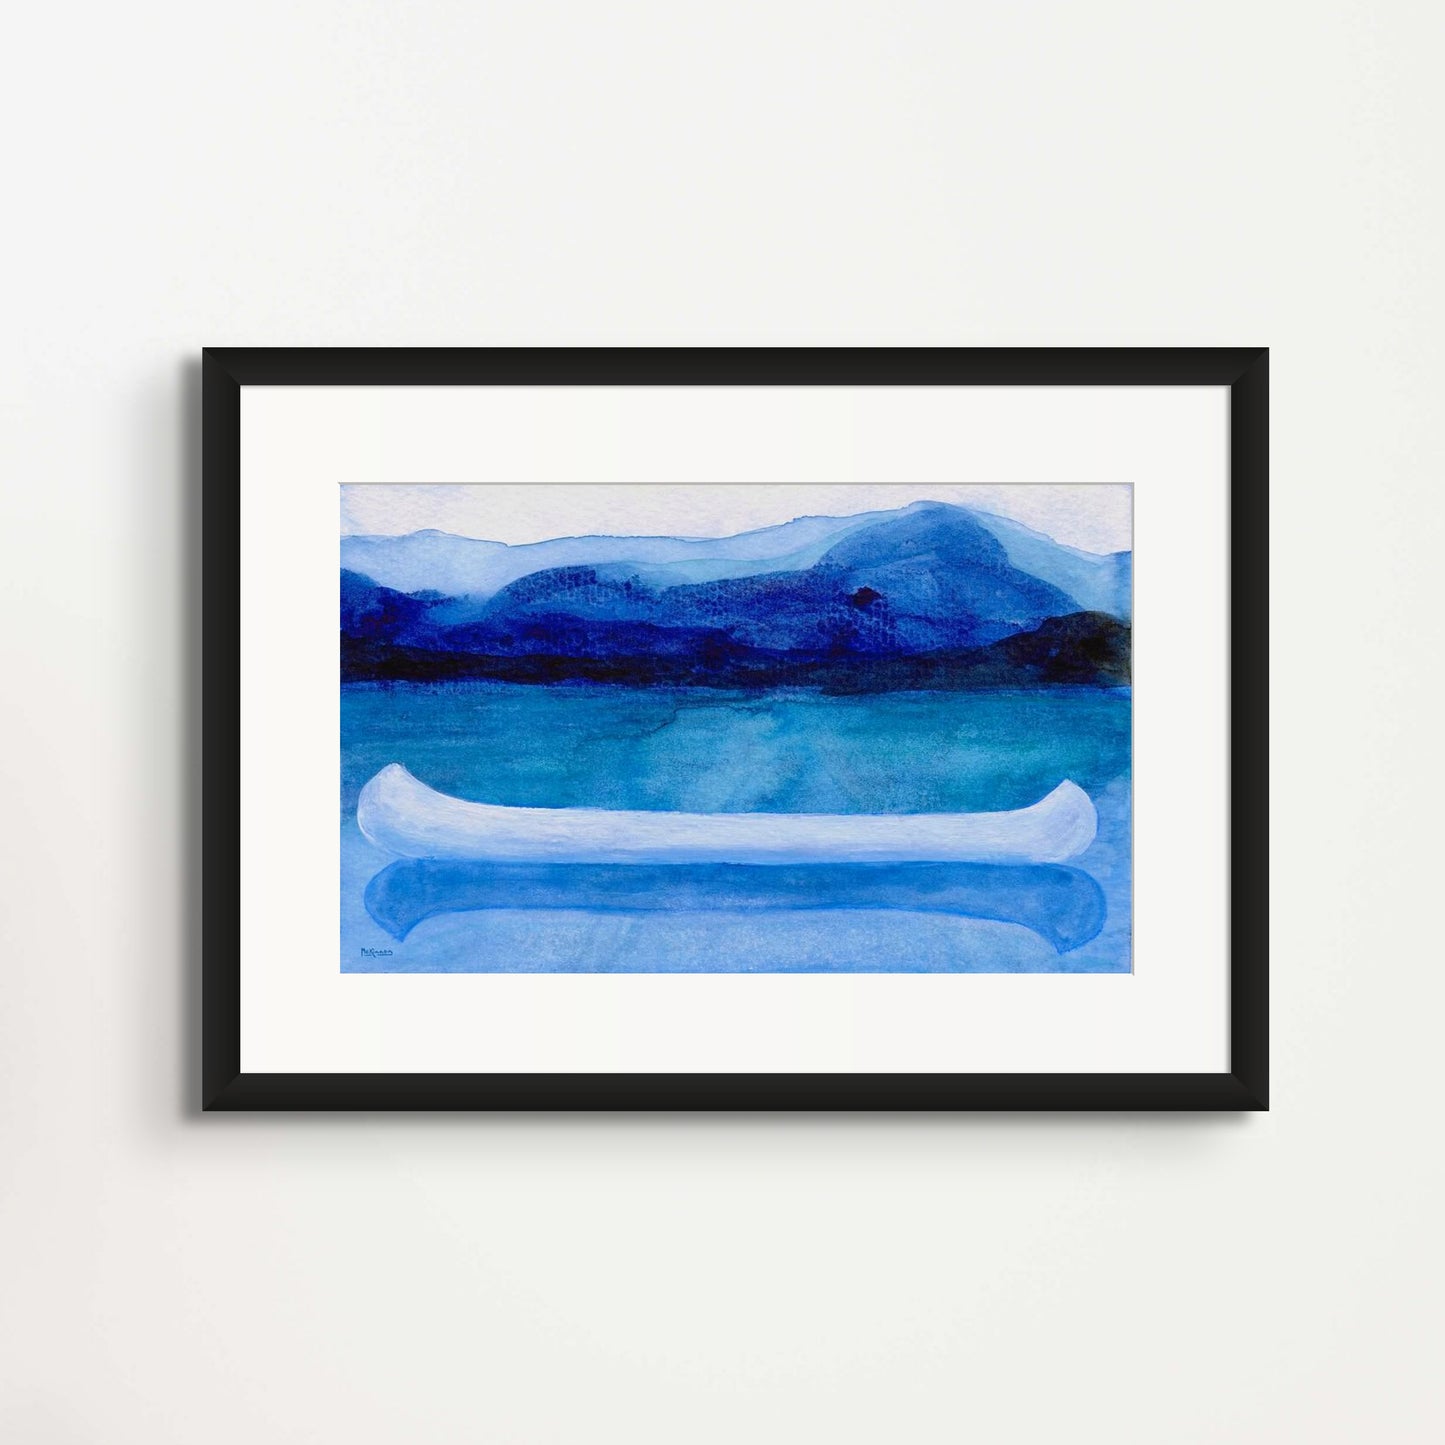 Large Framed Wall Art - Contemporary Boat Lake House Decor - Original Coastal Framed Print